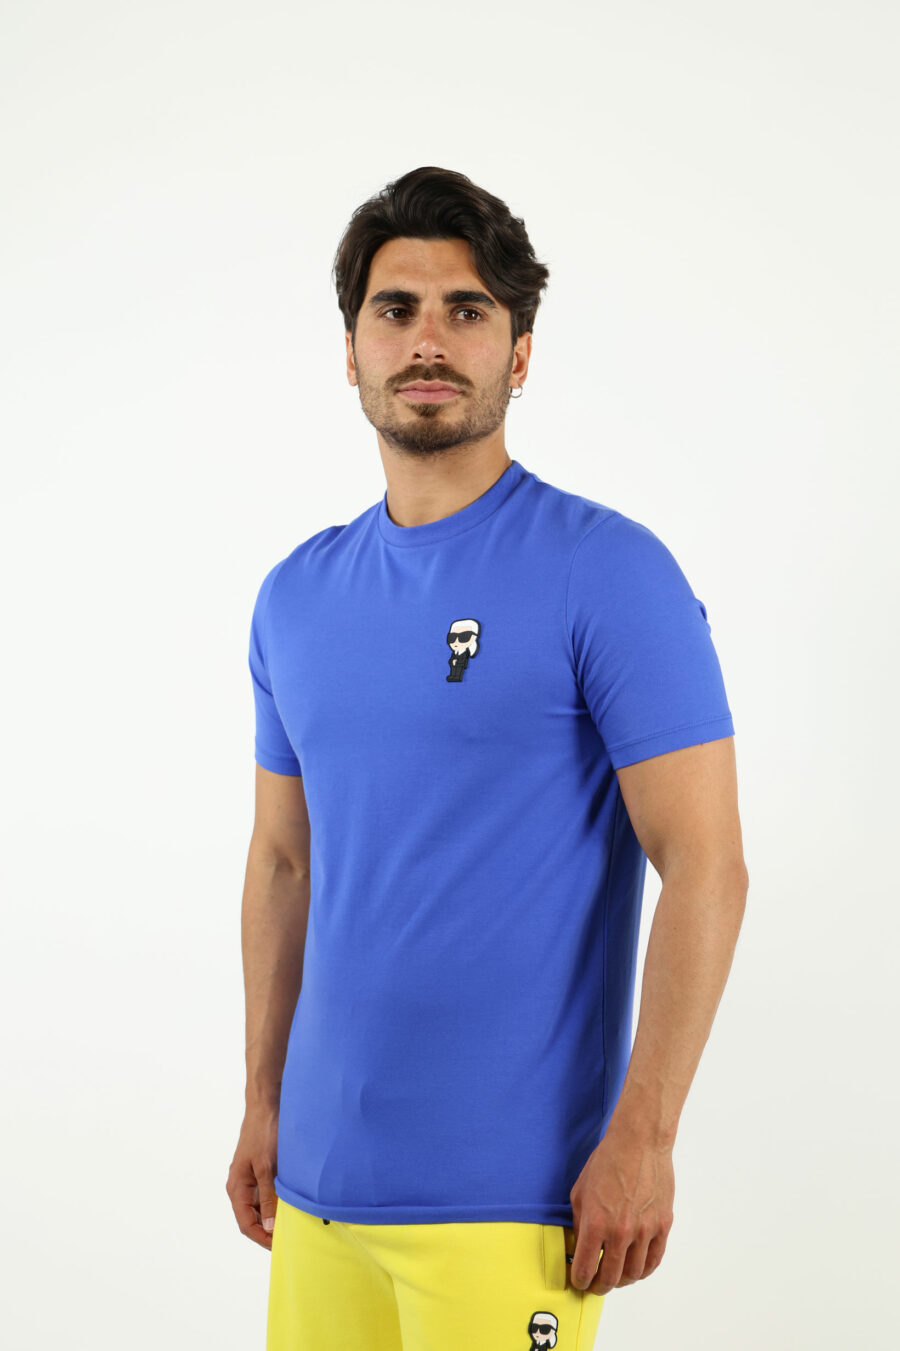 Camiseta azul eléctrico con minilogo "karl" en goma - number13978